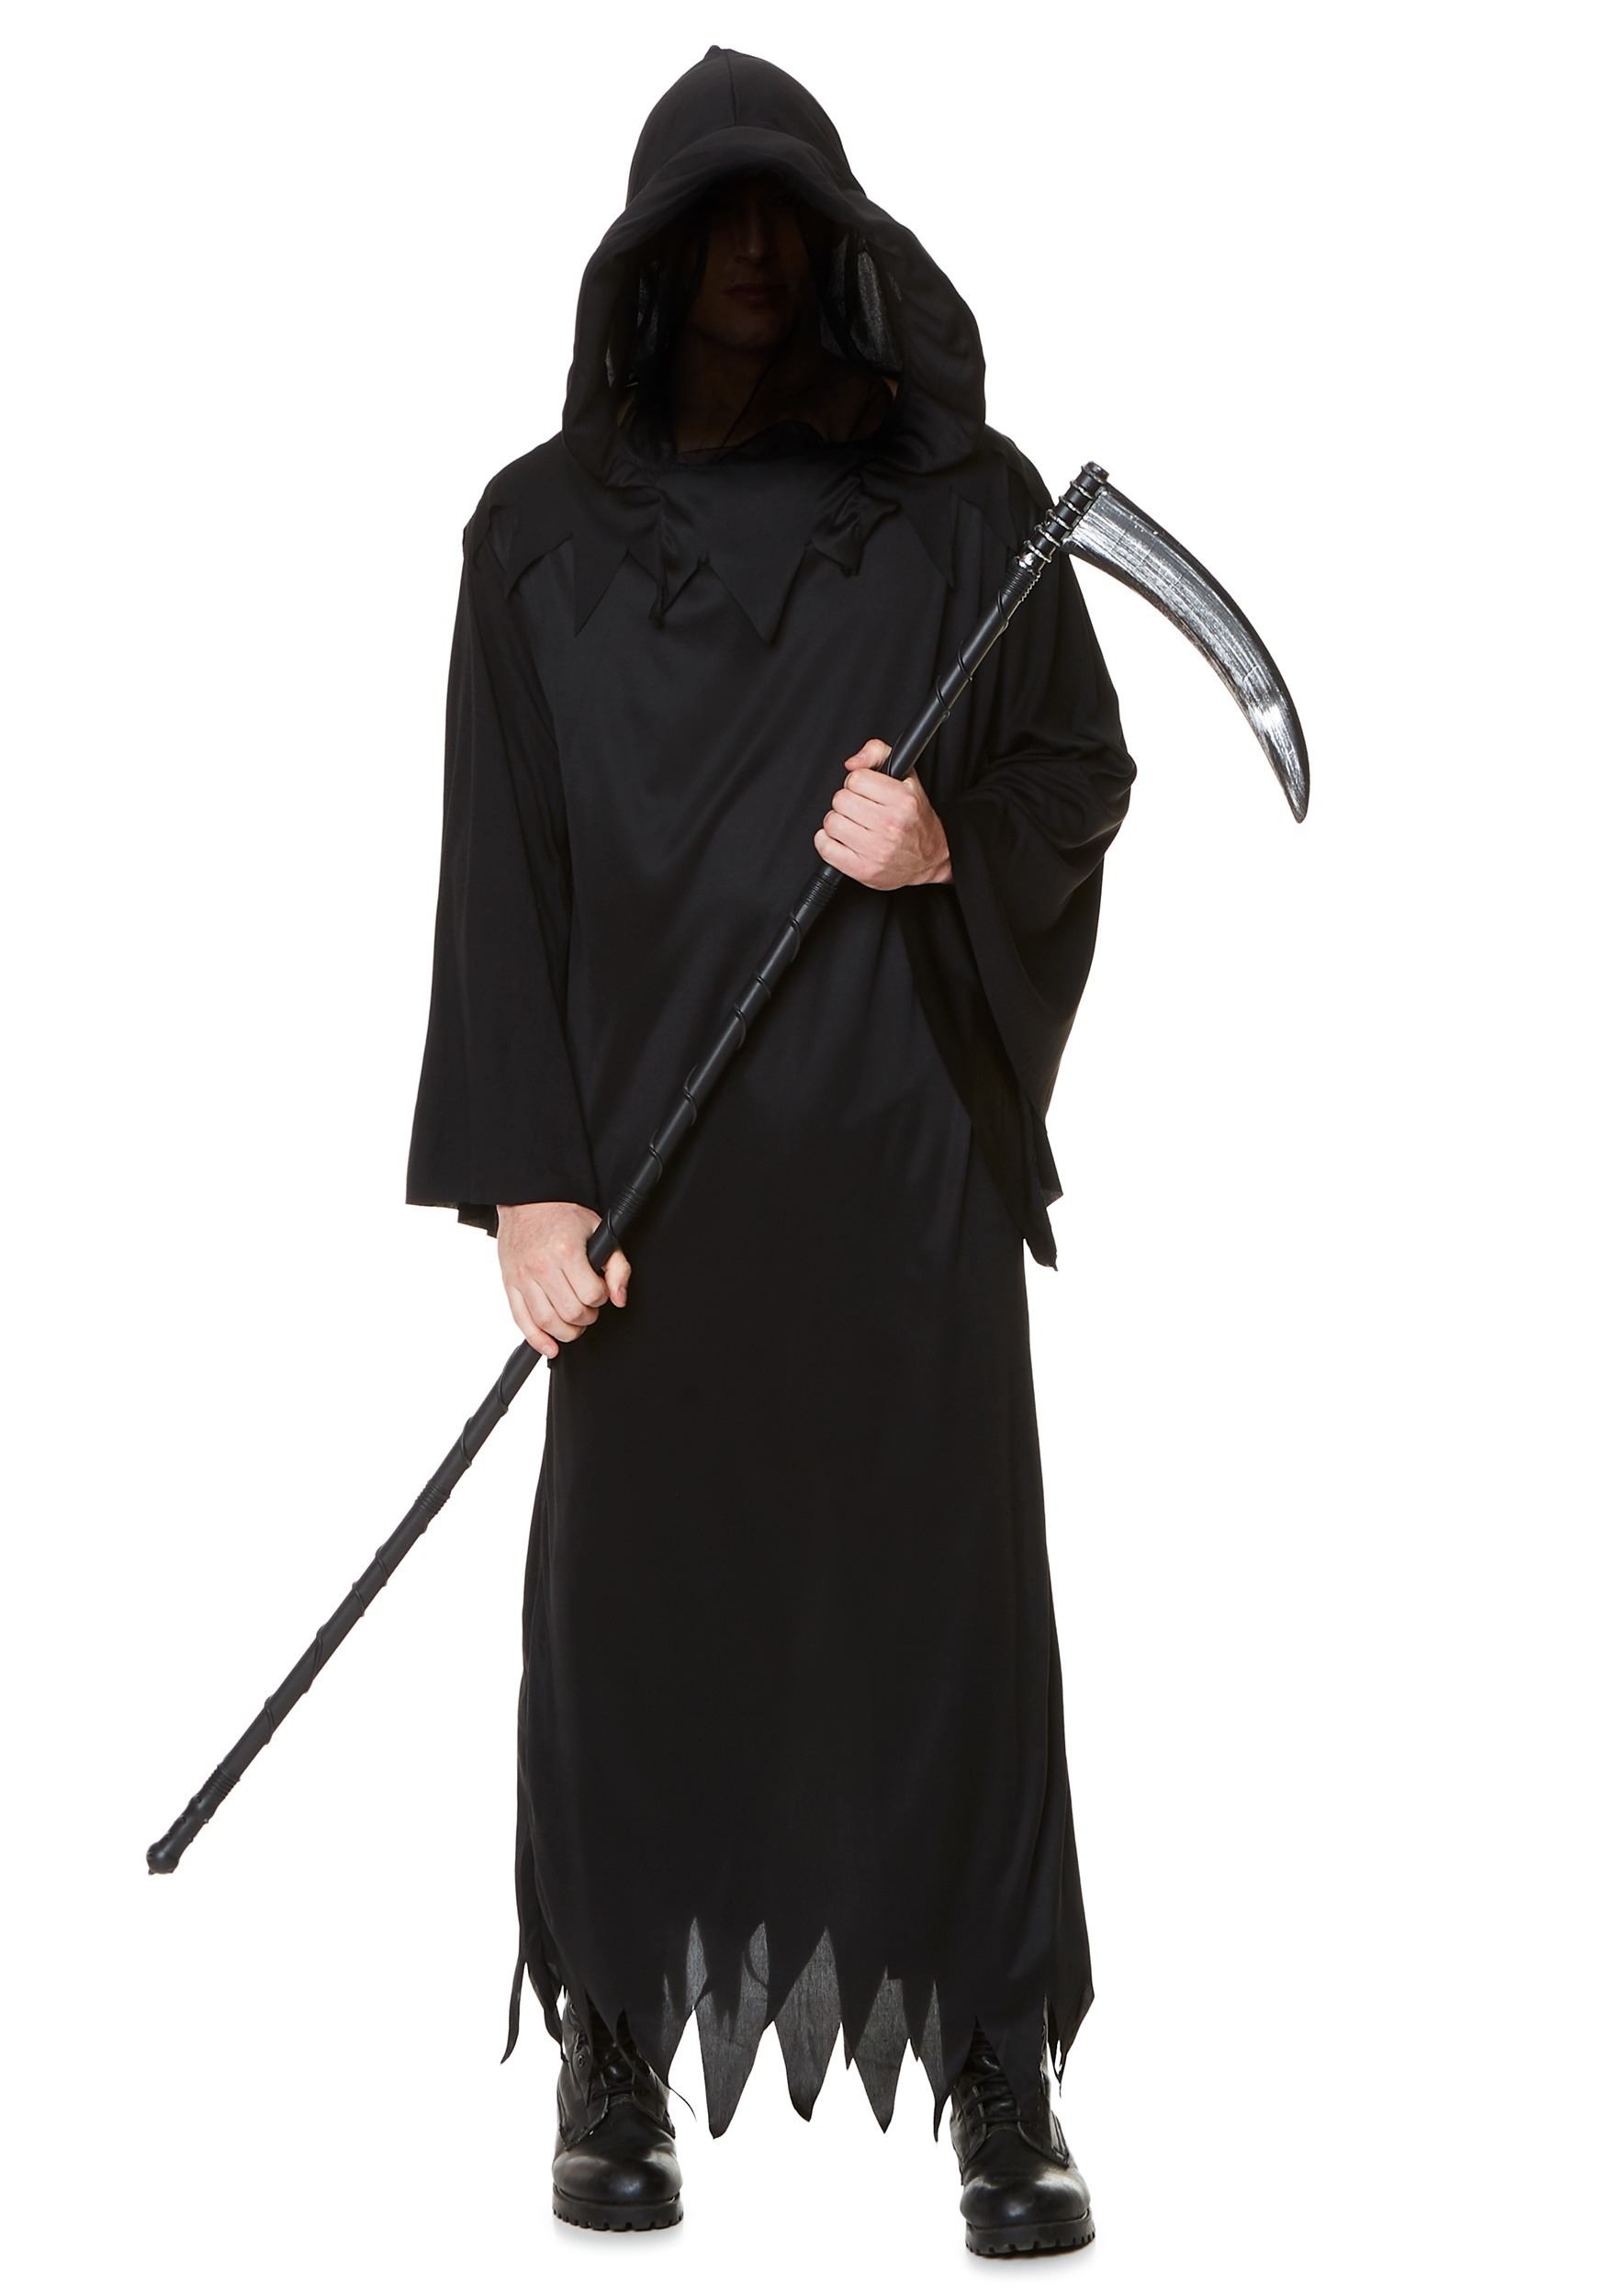 Grim Reaper Costume for Men